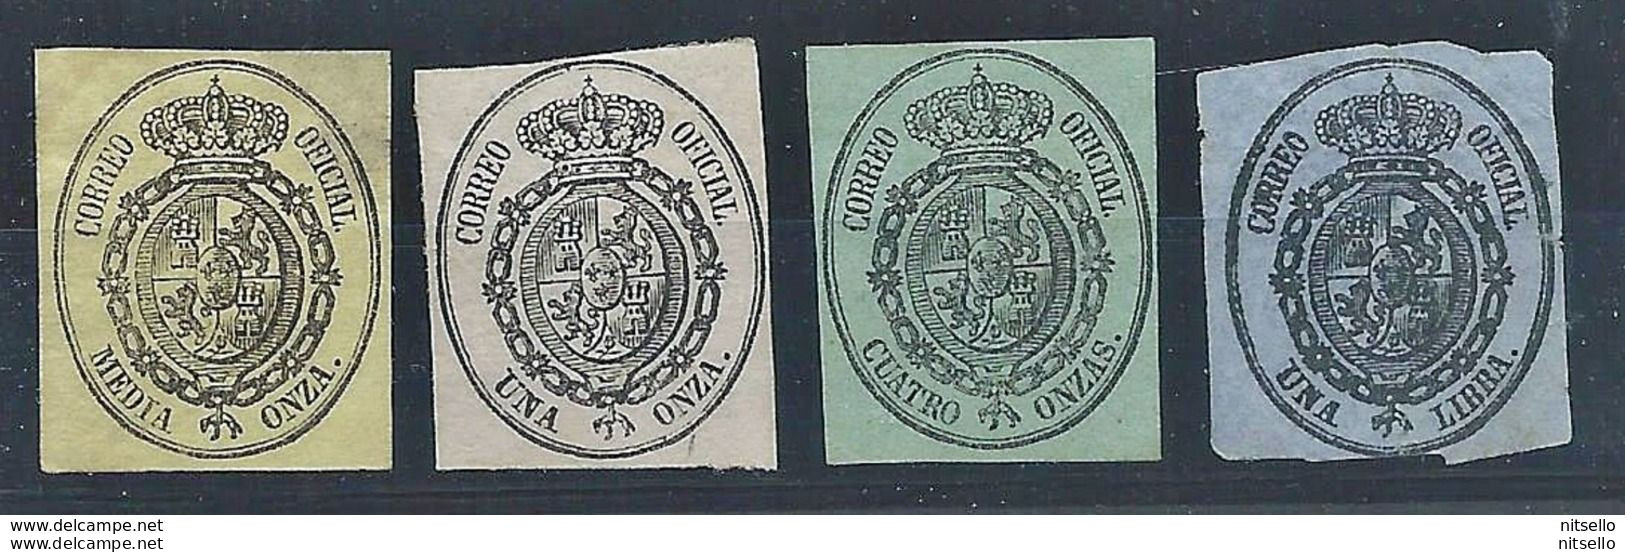 LOTE 1812   ///   (C125)  ESPAÑA EDIFIL Nº 35/38 - MICHEL Nº: 5/8   NUEVOS SIN GOMA CON CHARNELA *** LIQUIDATION **** - Unused Stamps